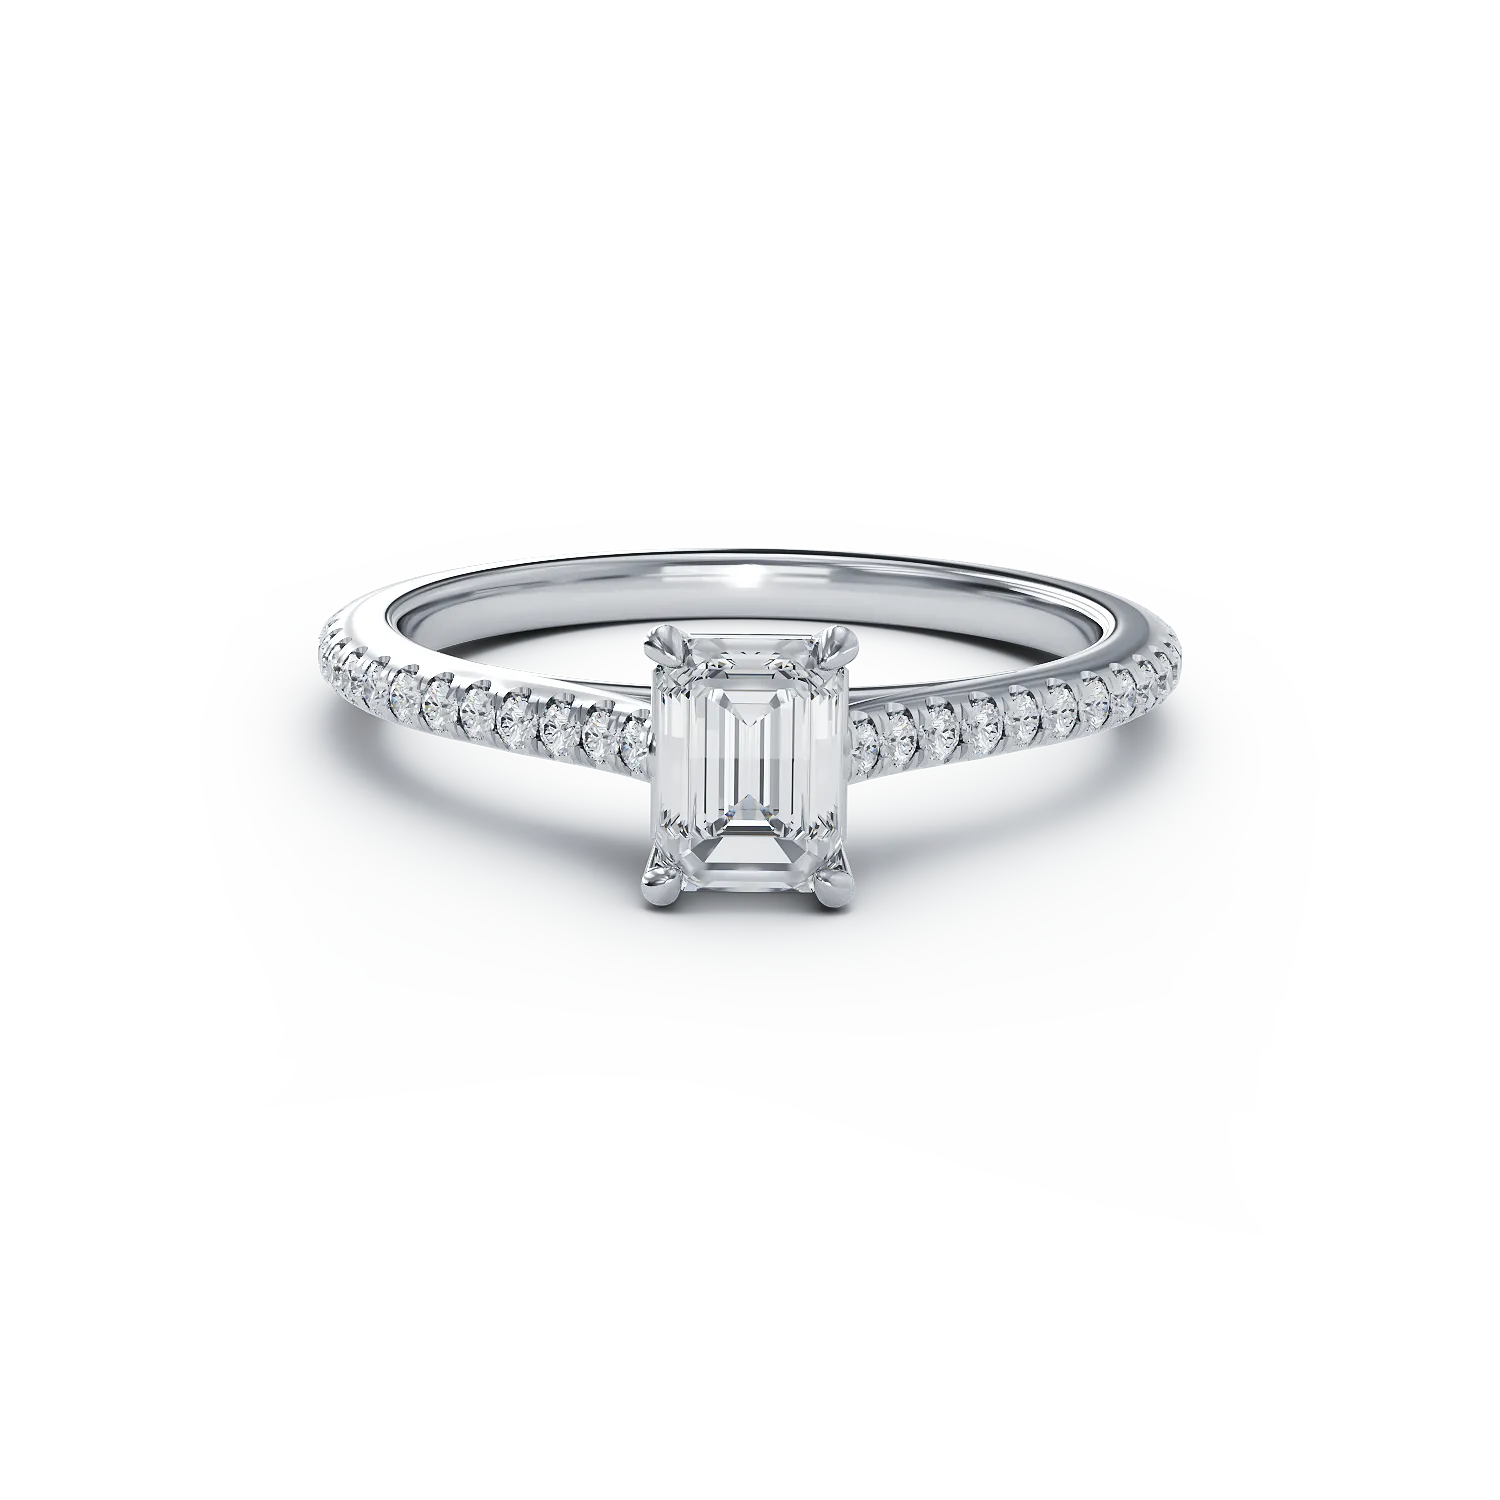 Diamond platinum engagement ring with 0.6ct diamond and 0.185ct diamonds